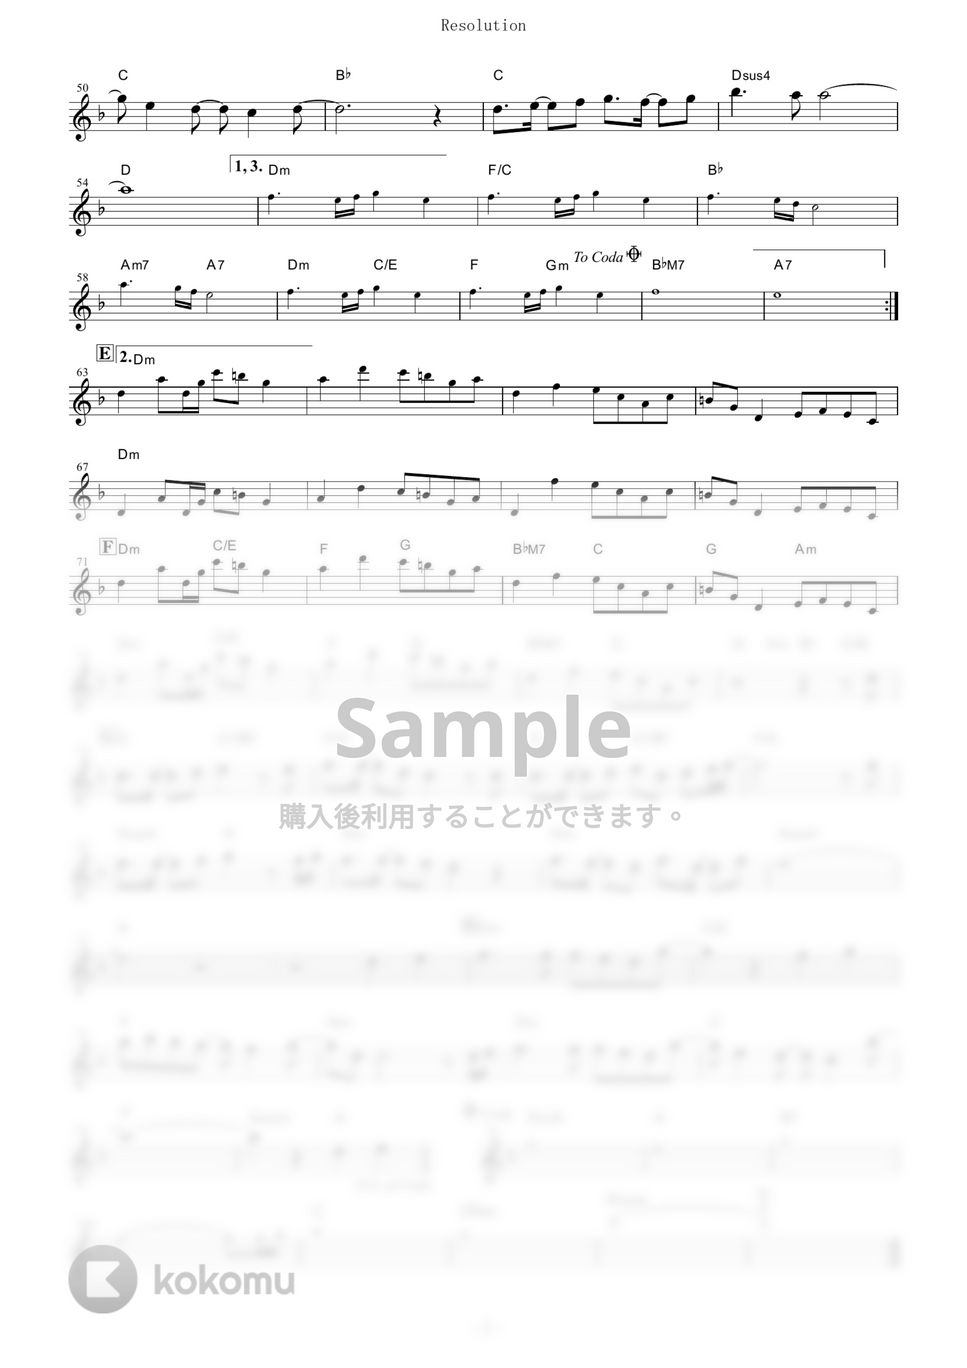 ROmantic Mode - Resolution (『機動新世紀ガンダムX』 / in Eb) by muta-sax